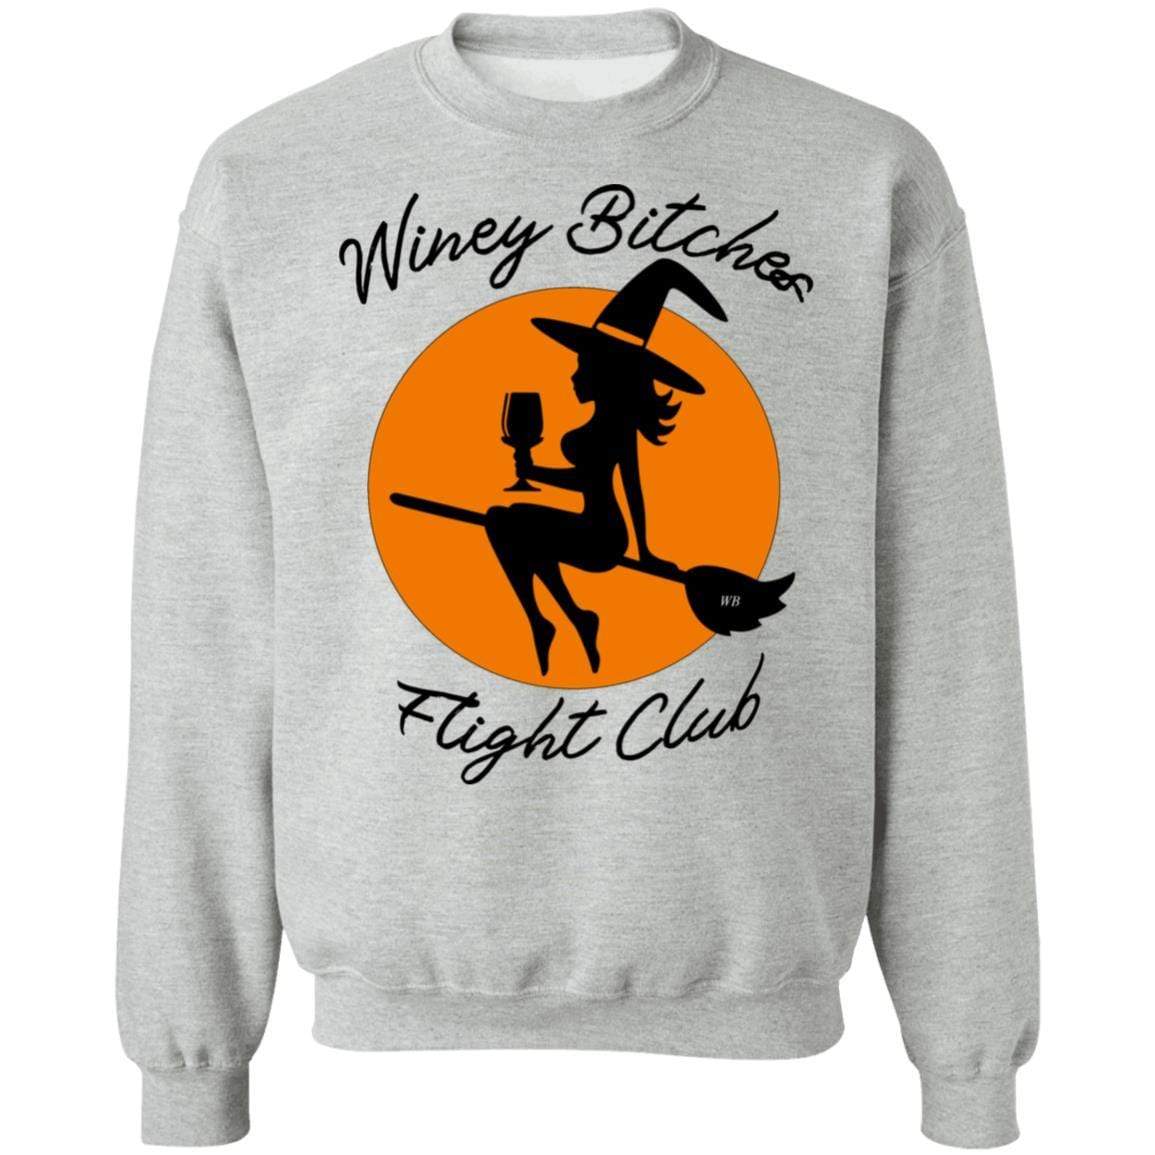 Sweatshirts Sport Grey / S WineyBitches.Co "Winey Bitches Flight Club"Crewneck Pullover Sweatshirt  8 oz. WineyBitchesCo